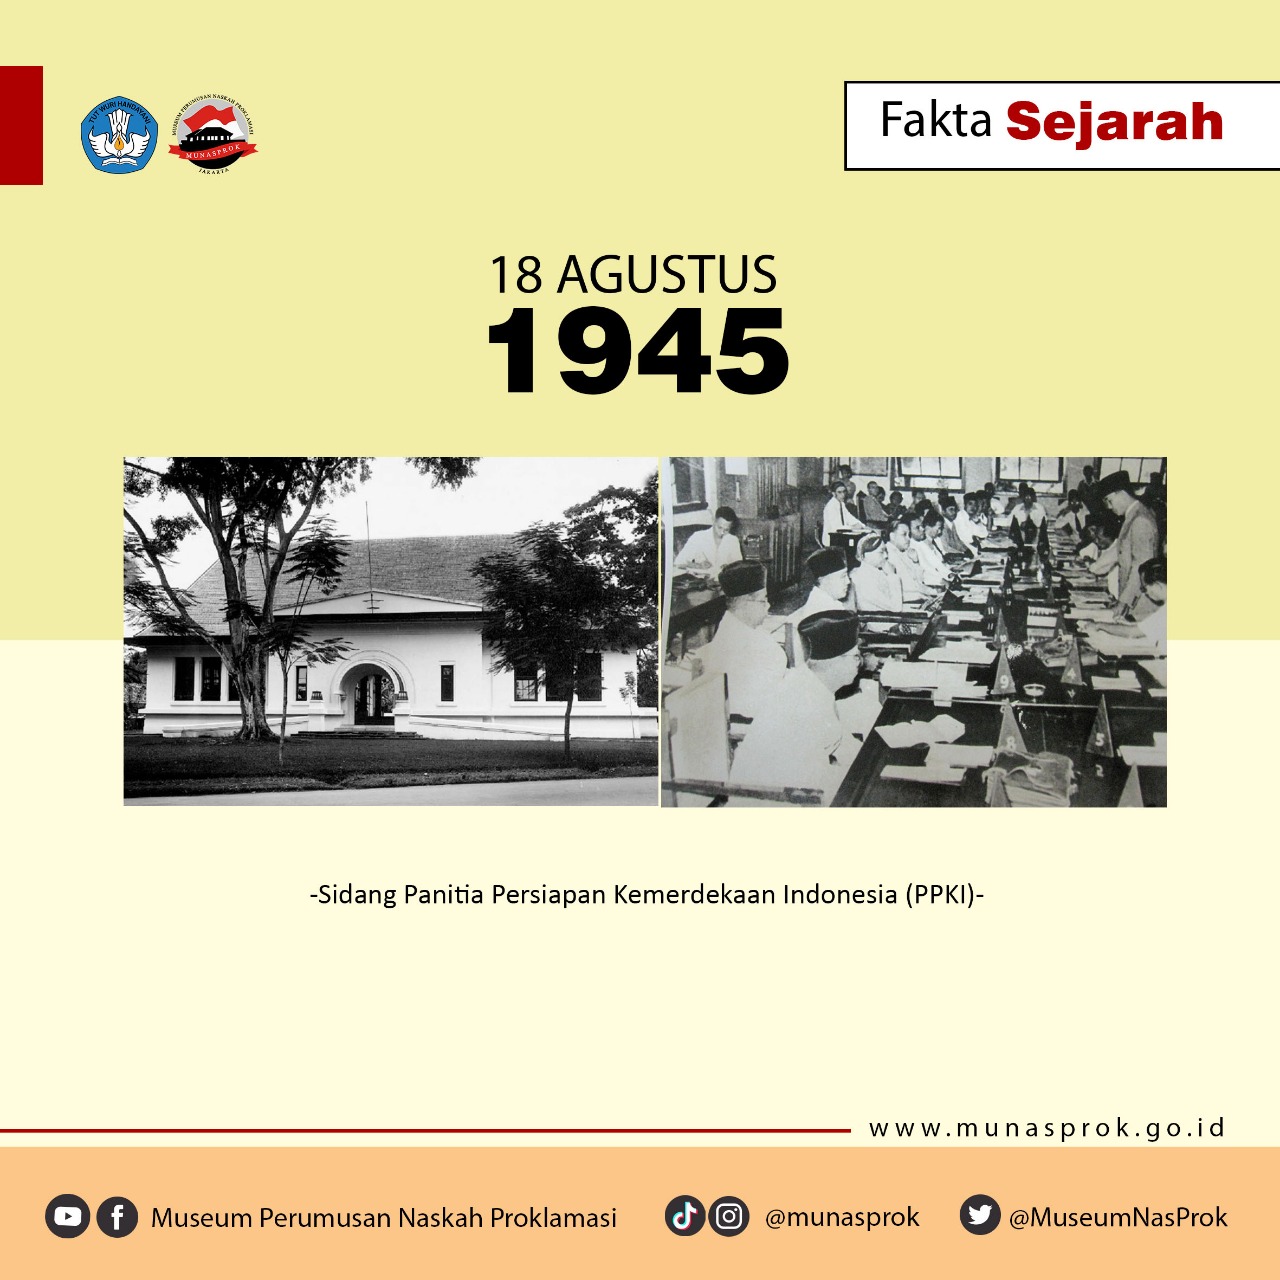 Setelah proklamasi kemerdekaan indonesia ppki mengesahkan undang-undang dasar negara republik indonesia tahun 1945 sebagai